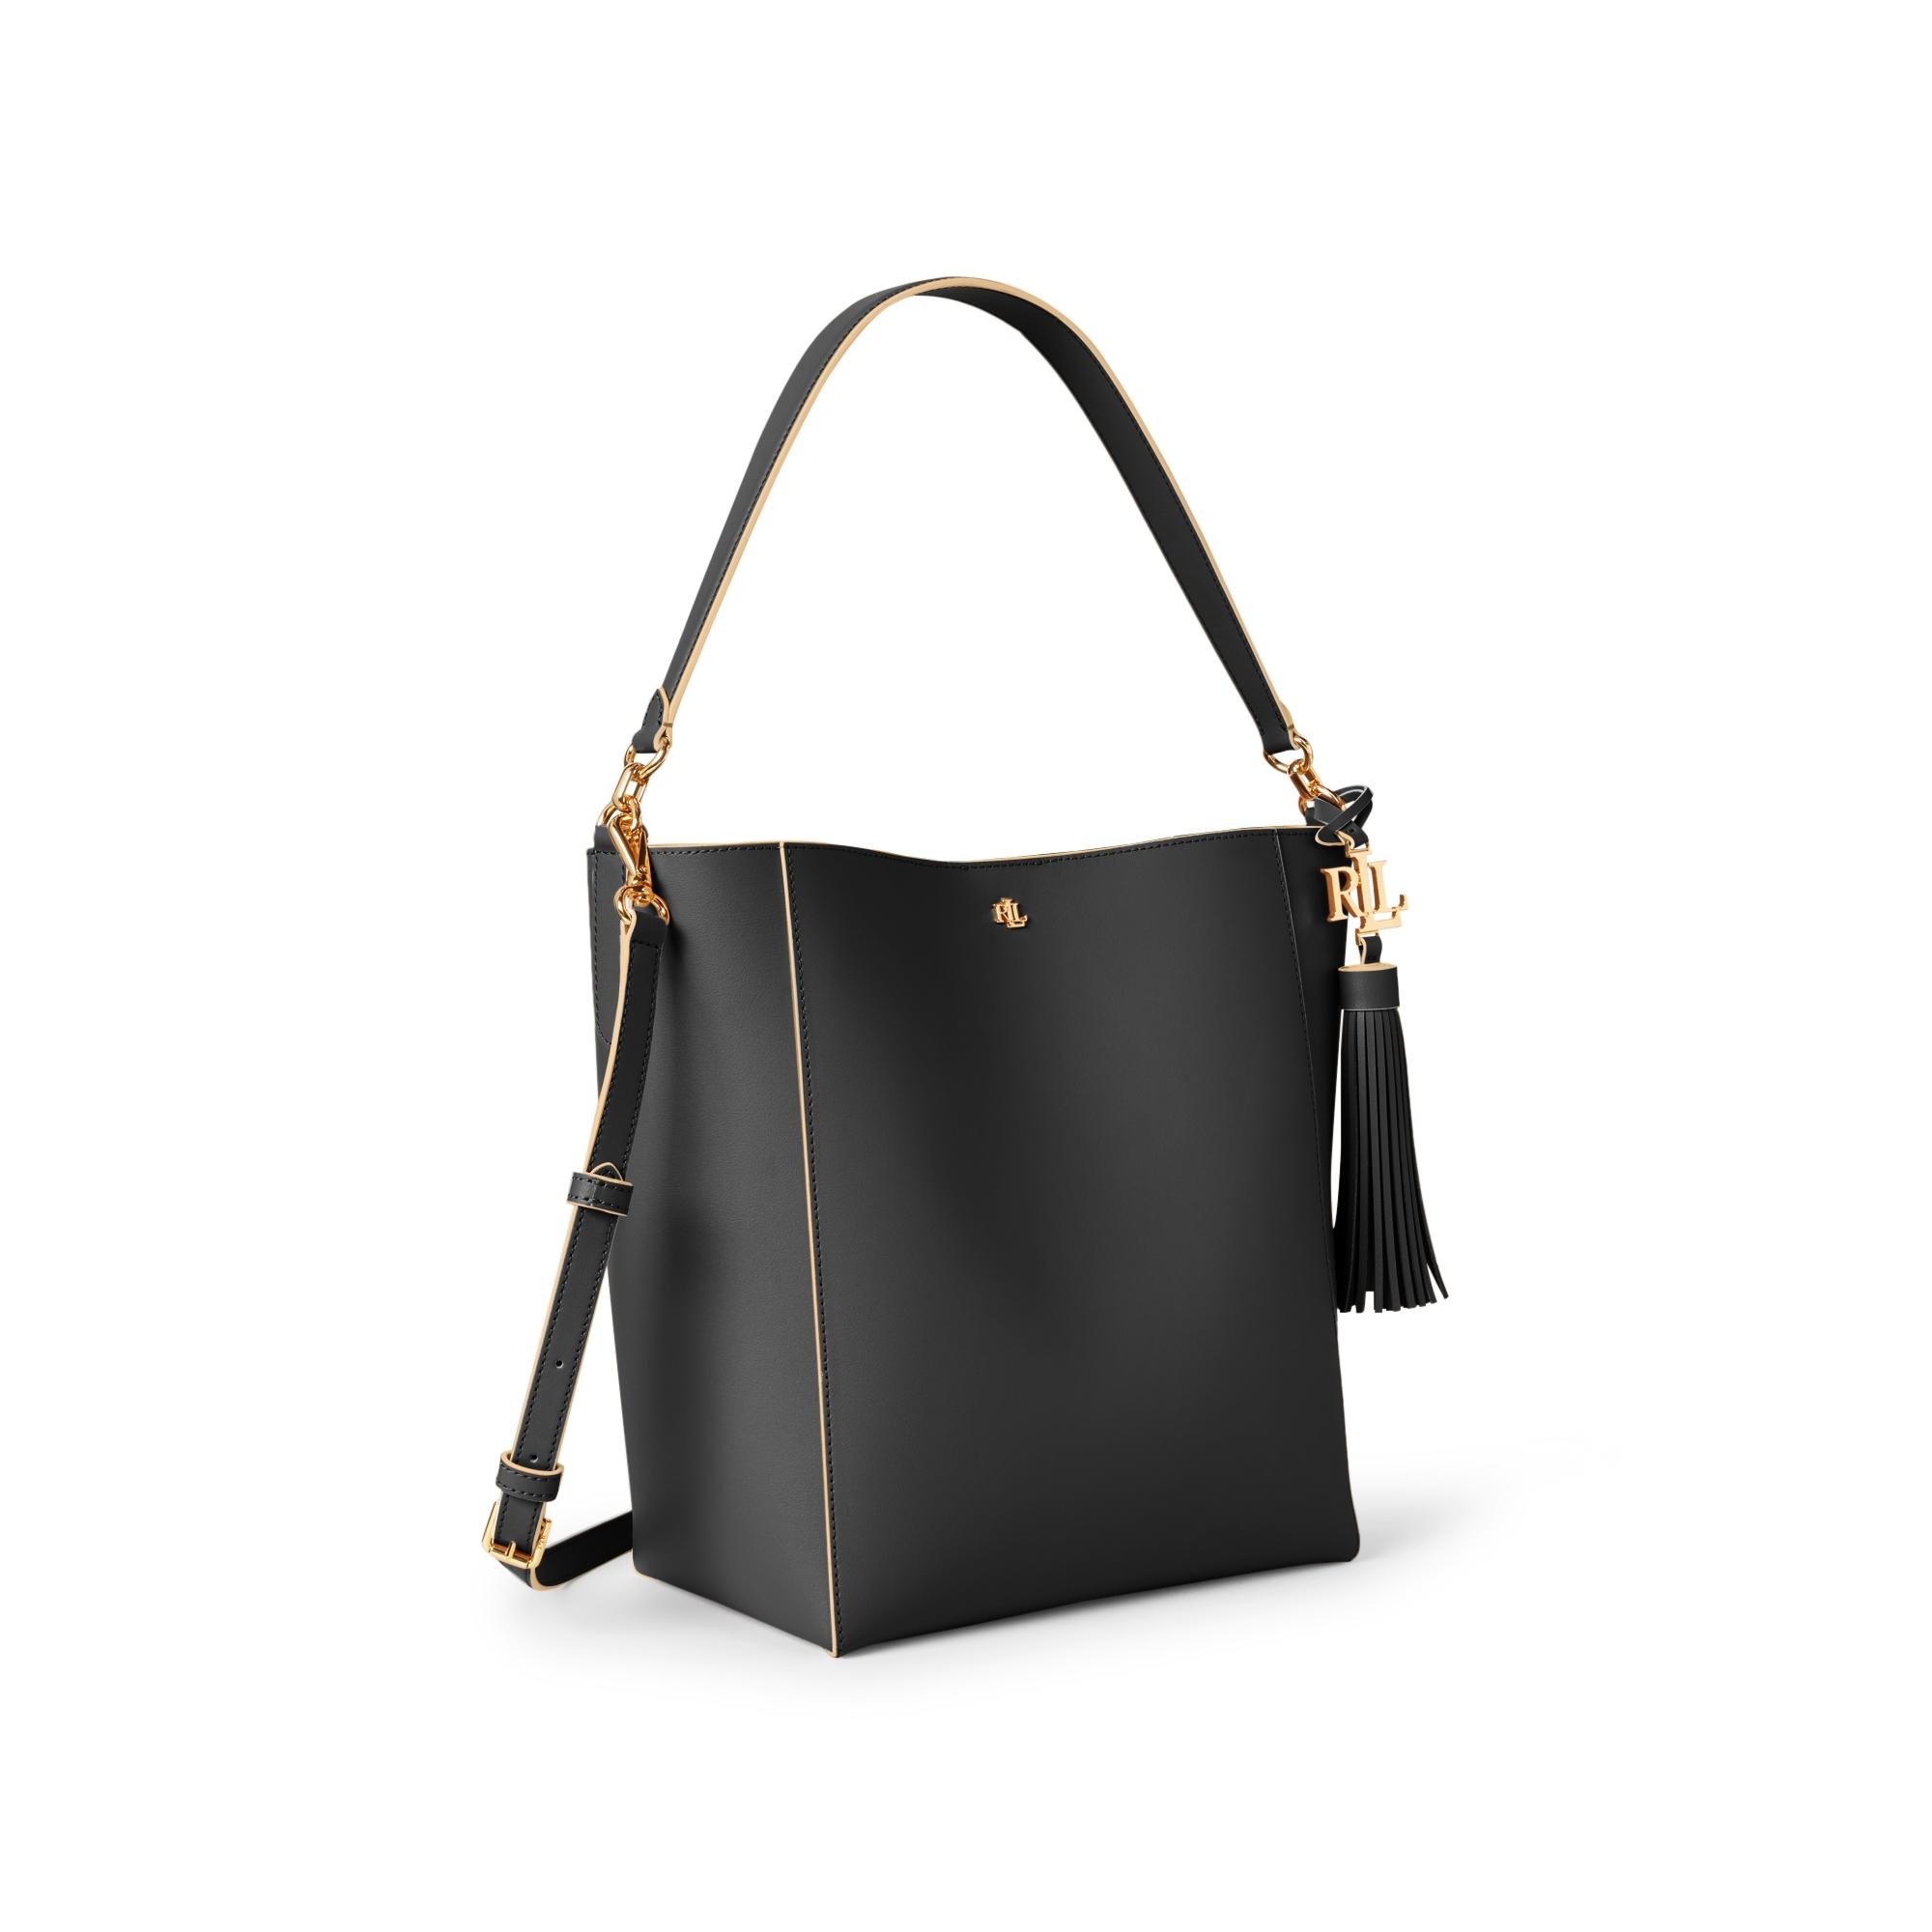 Ralph Lauren Shoulder bag medium size;